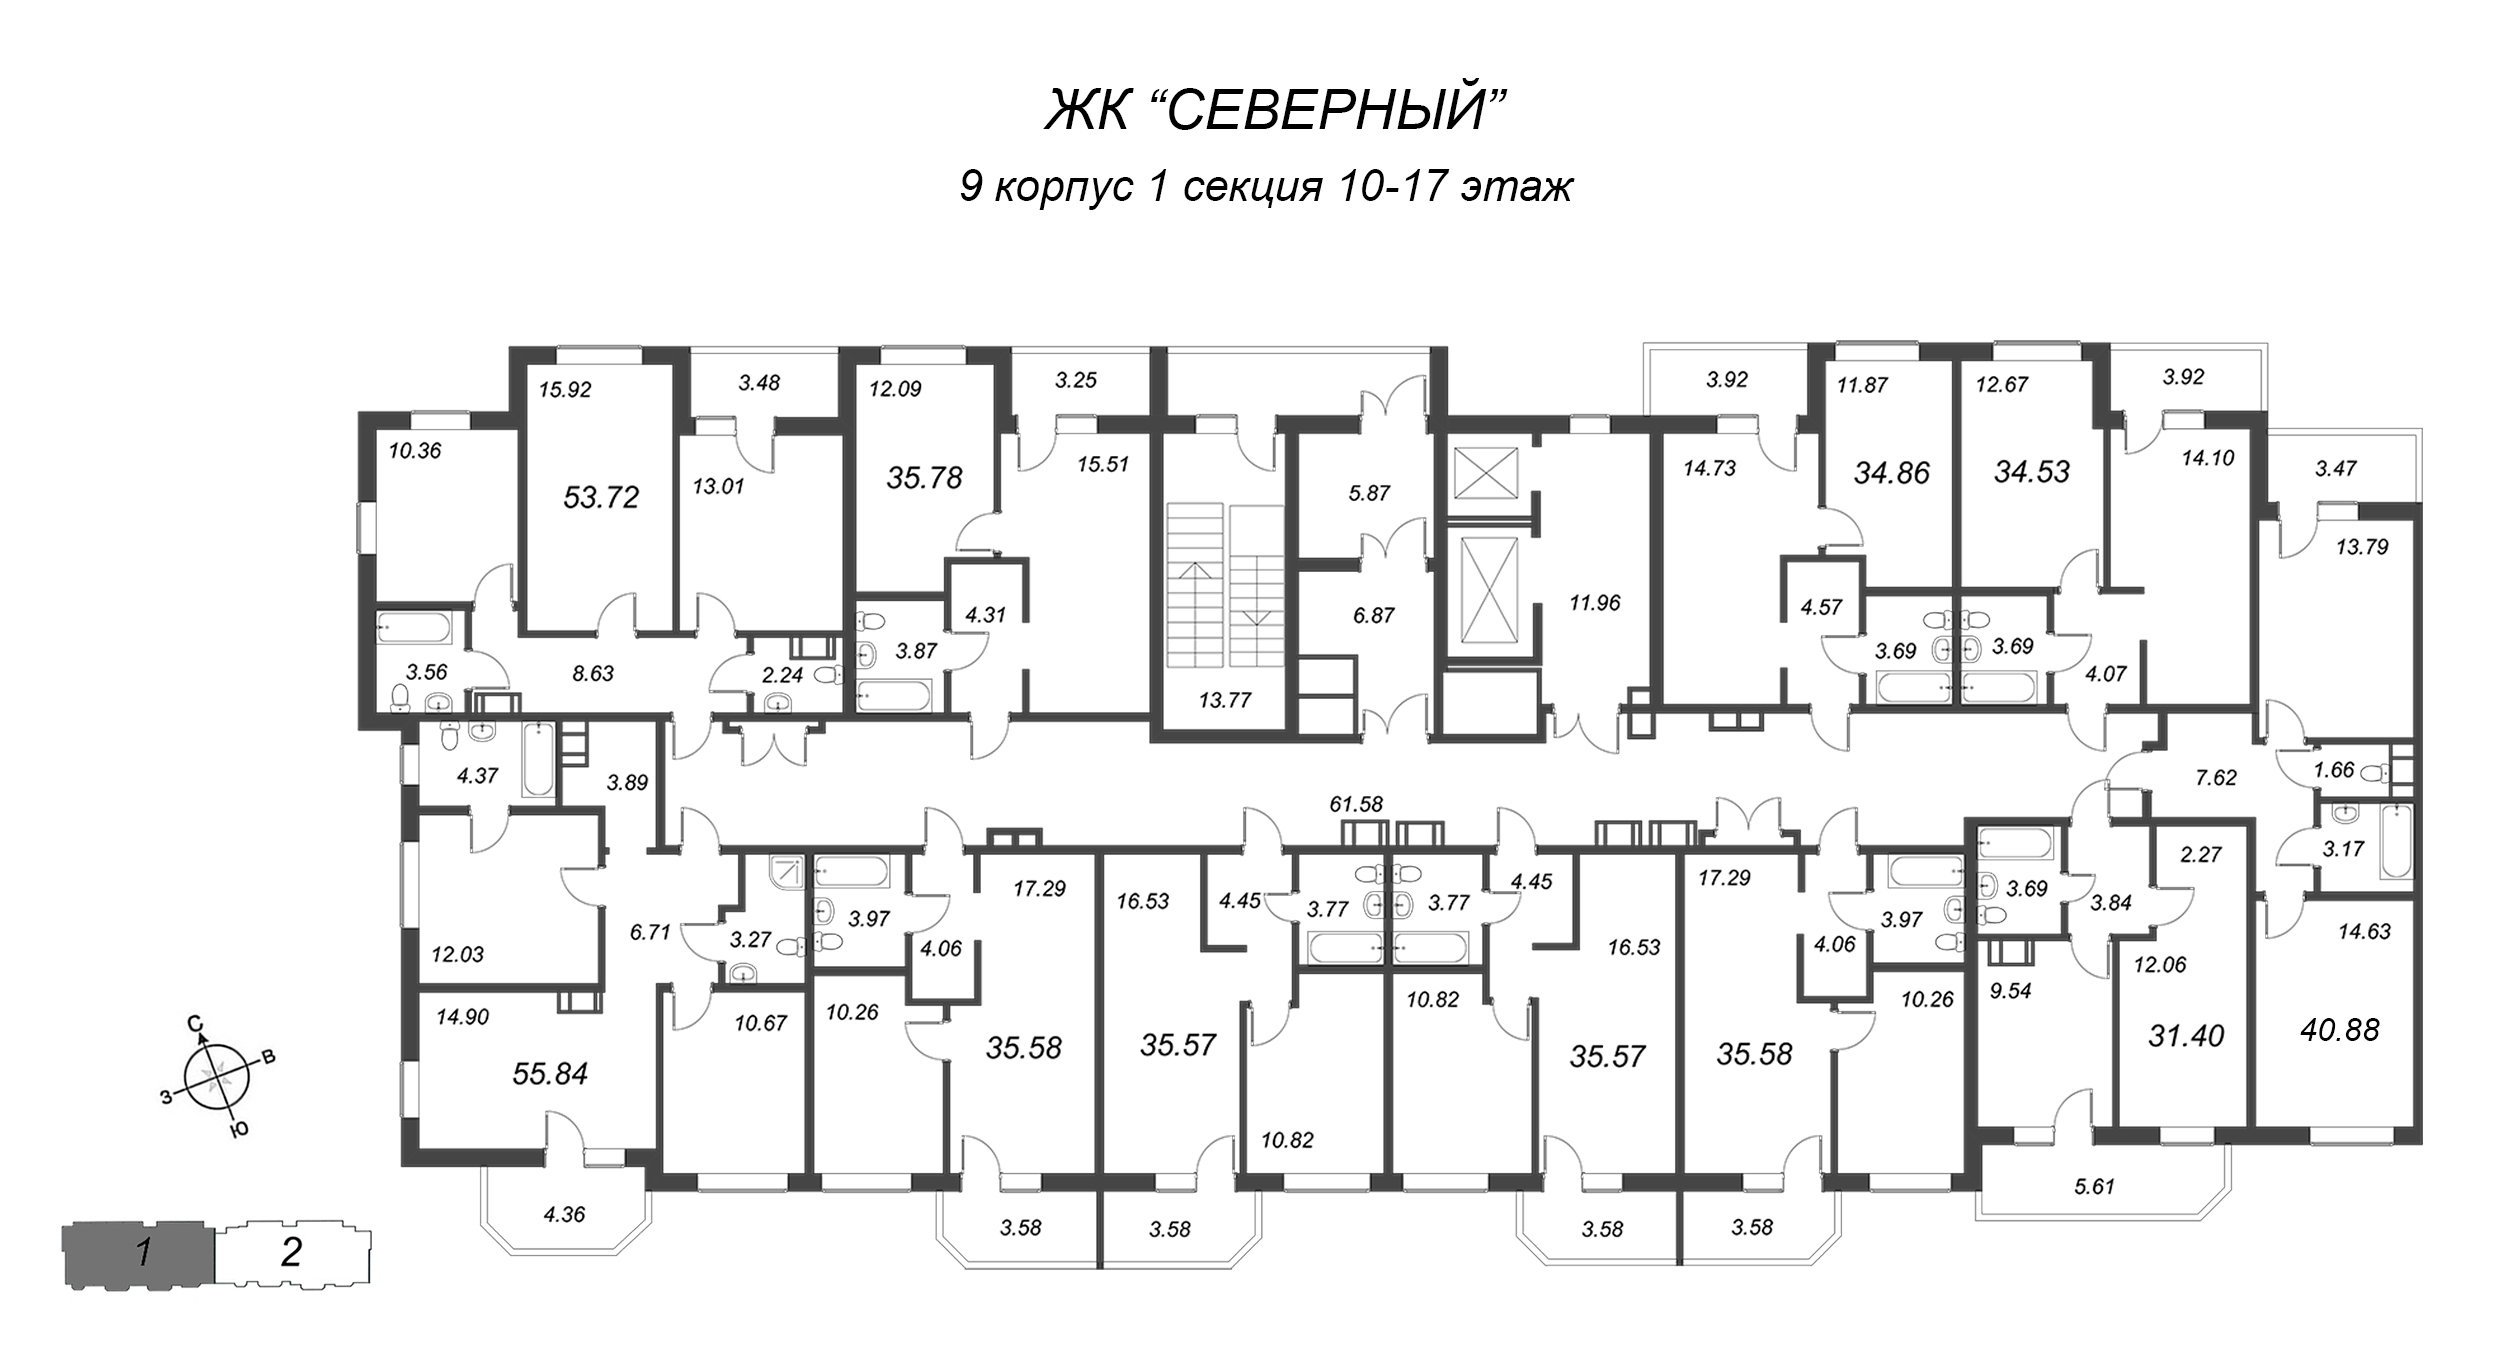 2-комнатная (Евро) квартира, 35.78 м² - планировка этажа